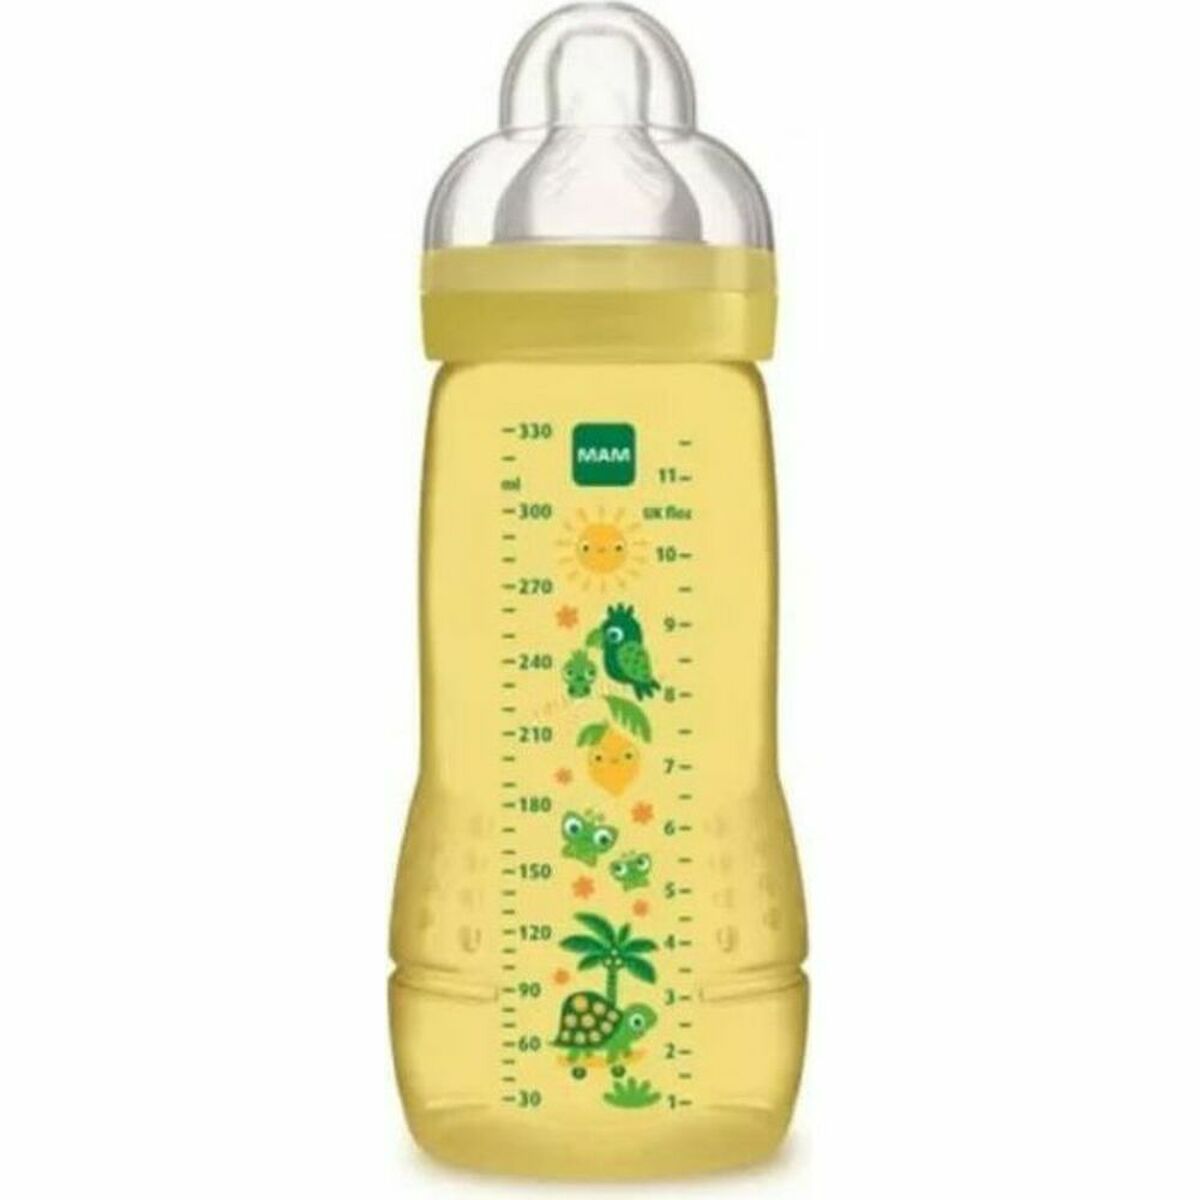 MAM Easy Active Gelbe Babyflasche 330 ml